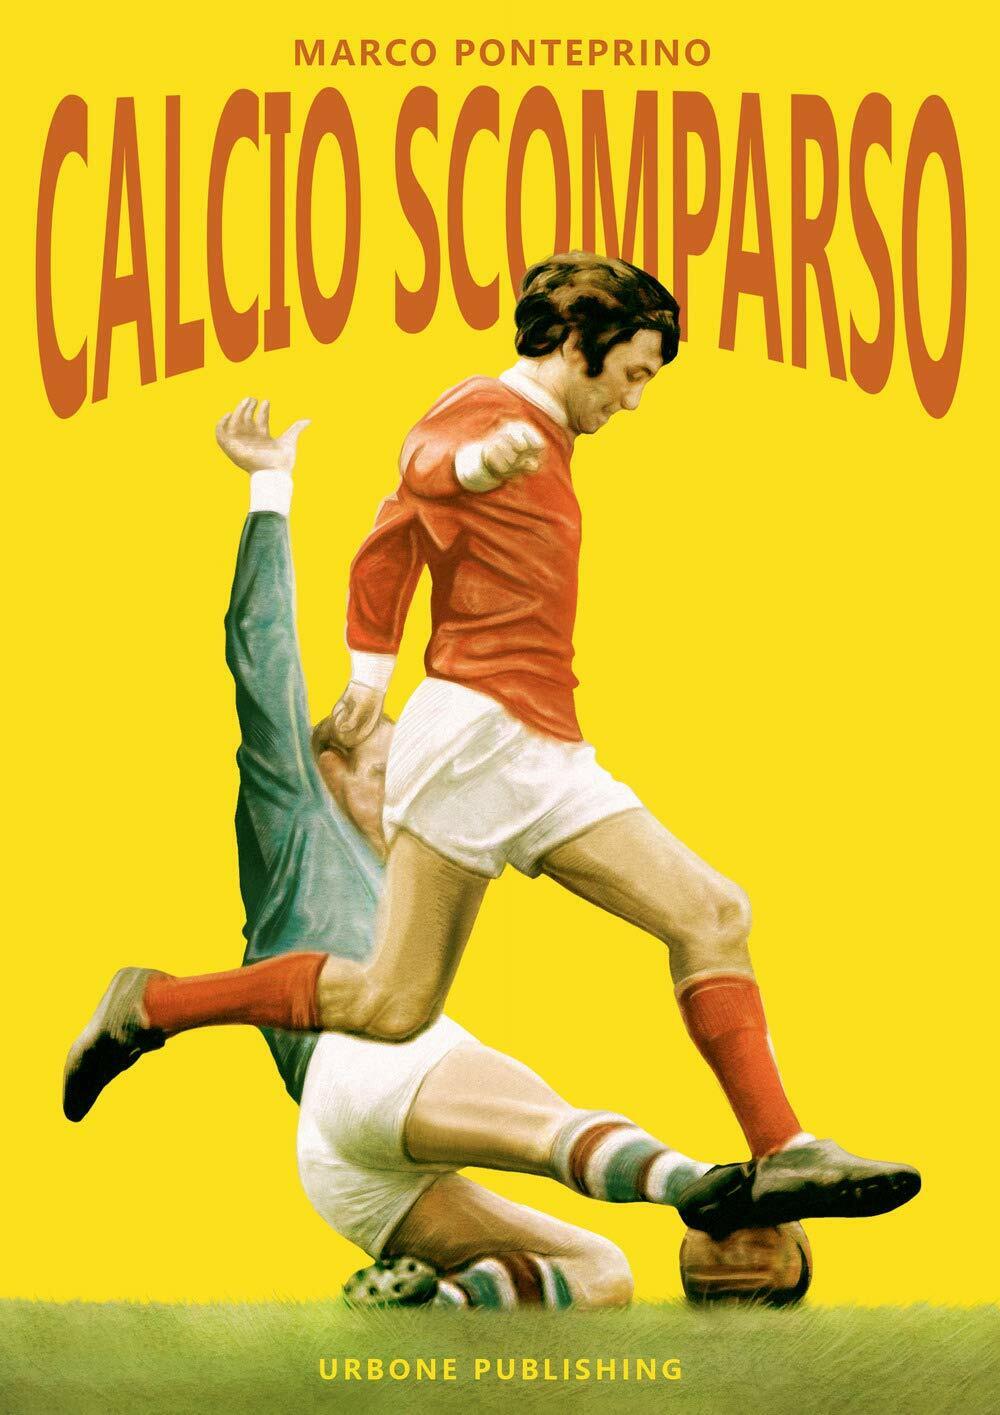 Calcio scomparso - Marco Ponteprino - Gianluca Iuorio Urbone Publishing,2019 libro usato